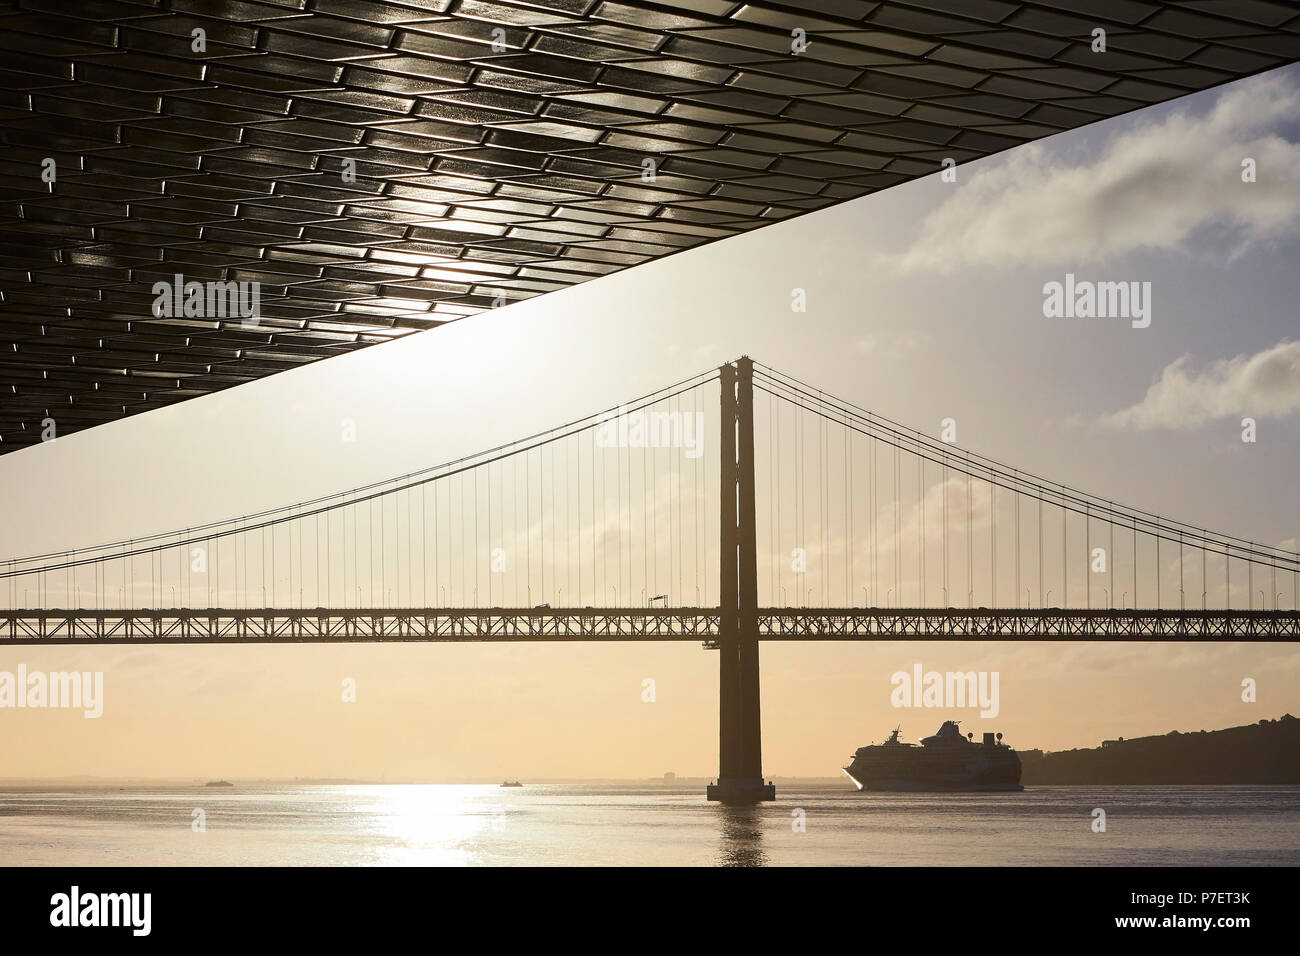 View towards Ponte de 25 Abril at dawn. MAAT, Lisbon, Portugal. Architect: A LA, 2016. Stock Photo